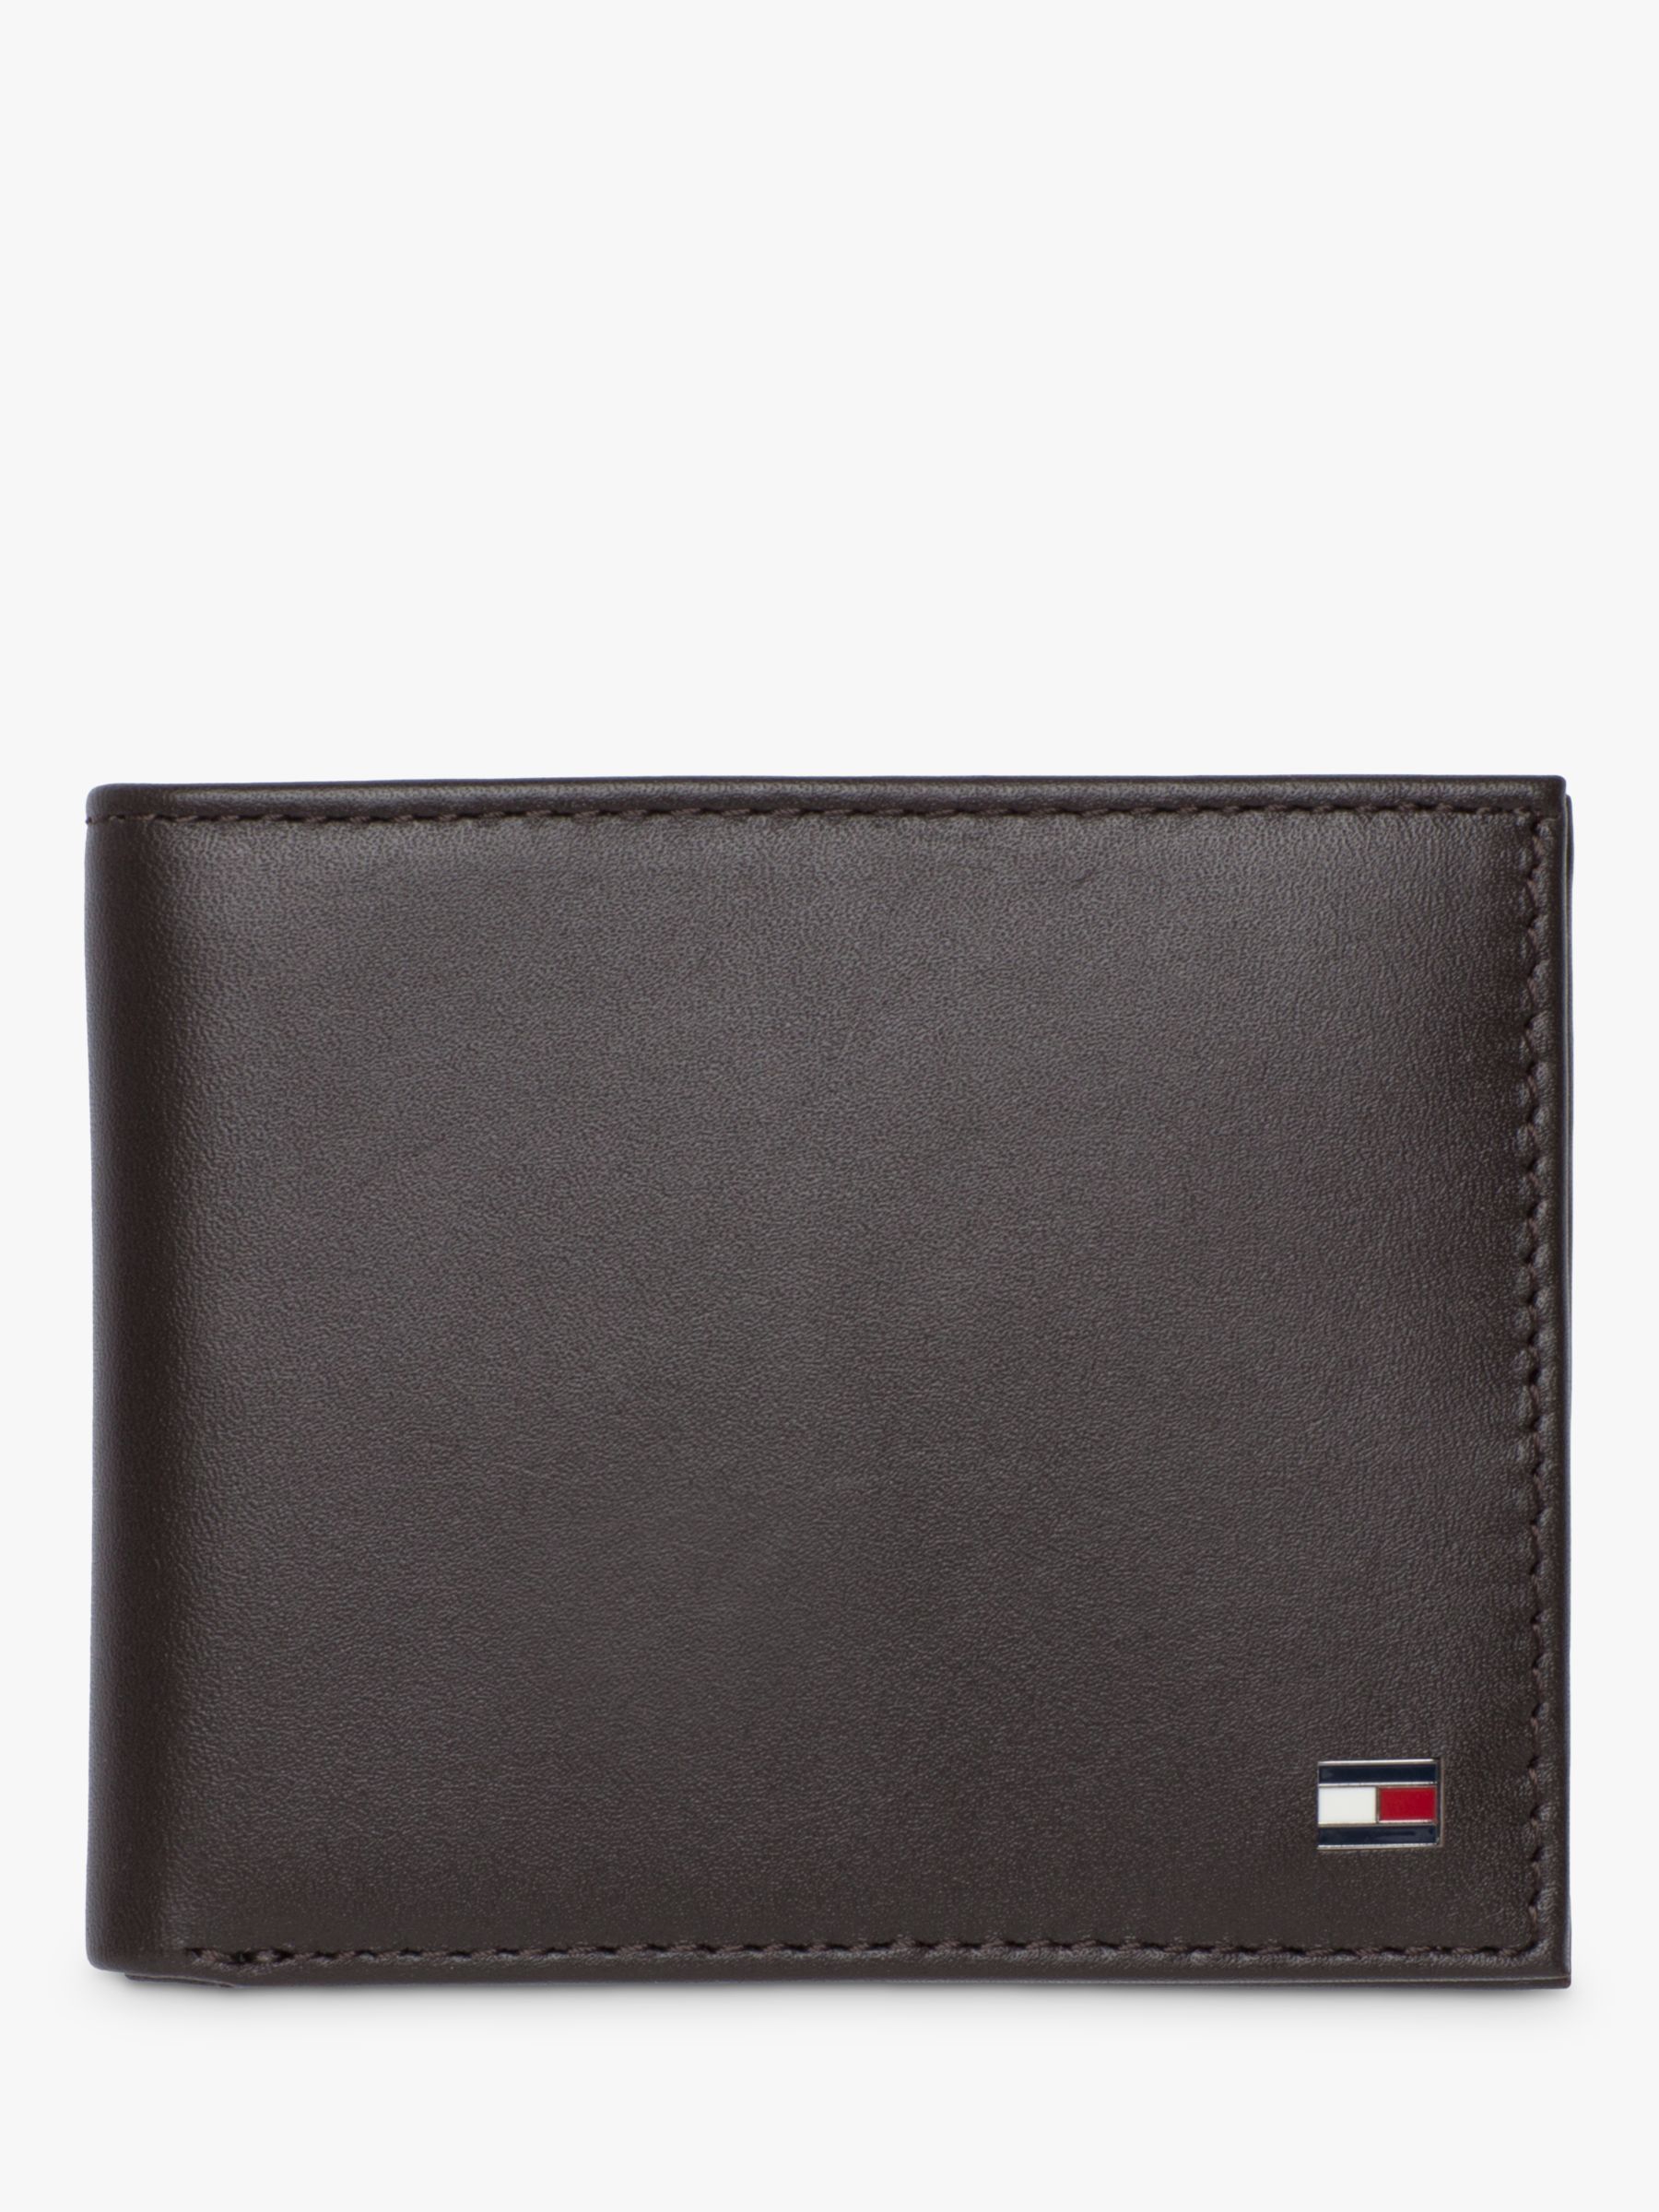 raket stroom zoom Tommy Hilfiger Eton Leather Mini Wallet, Brown at John Lewis & Partners